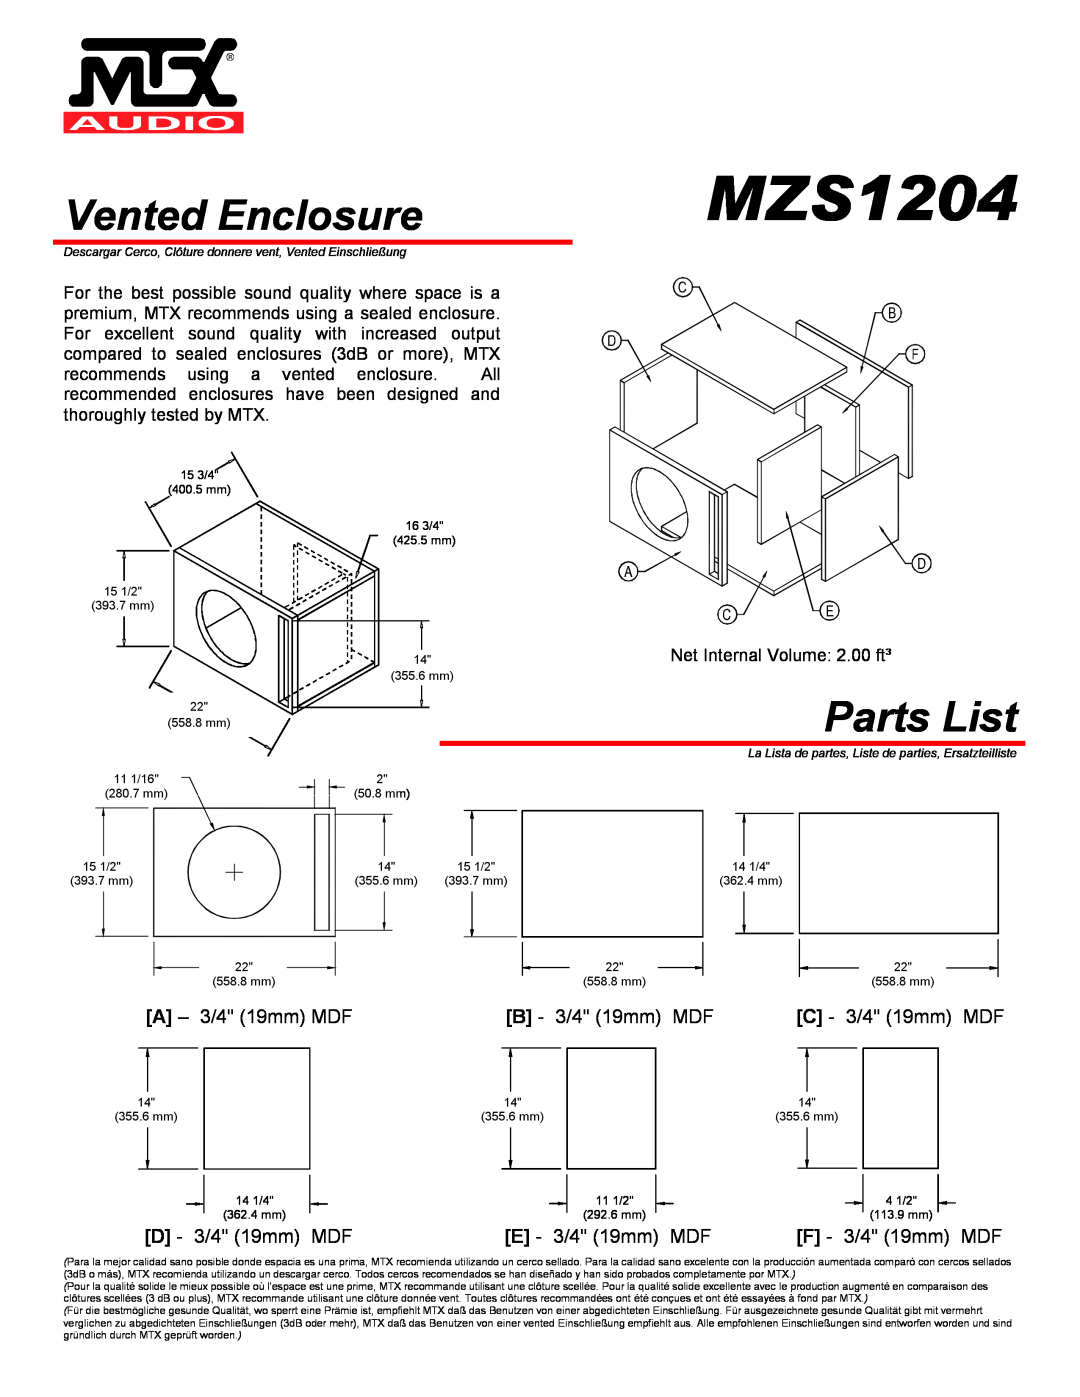 MTX Audio MZS1204 Vented Enclosure, E - 3/4 19mm MDF, F - 3/4 19mm MDF, Parts List, A - 3/4 19mm MDF, B - 3/4 19mm MDF 